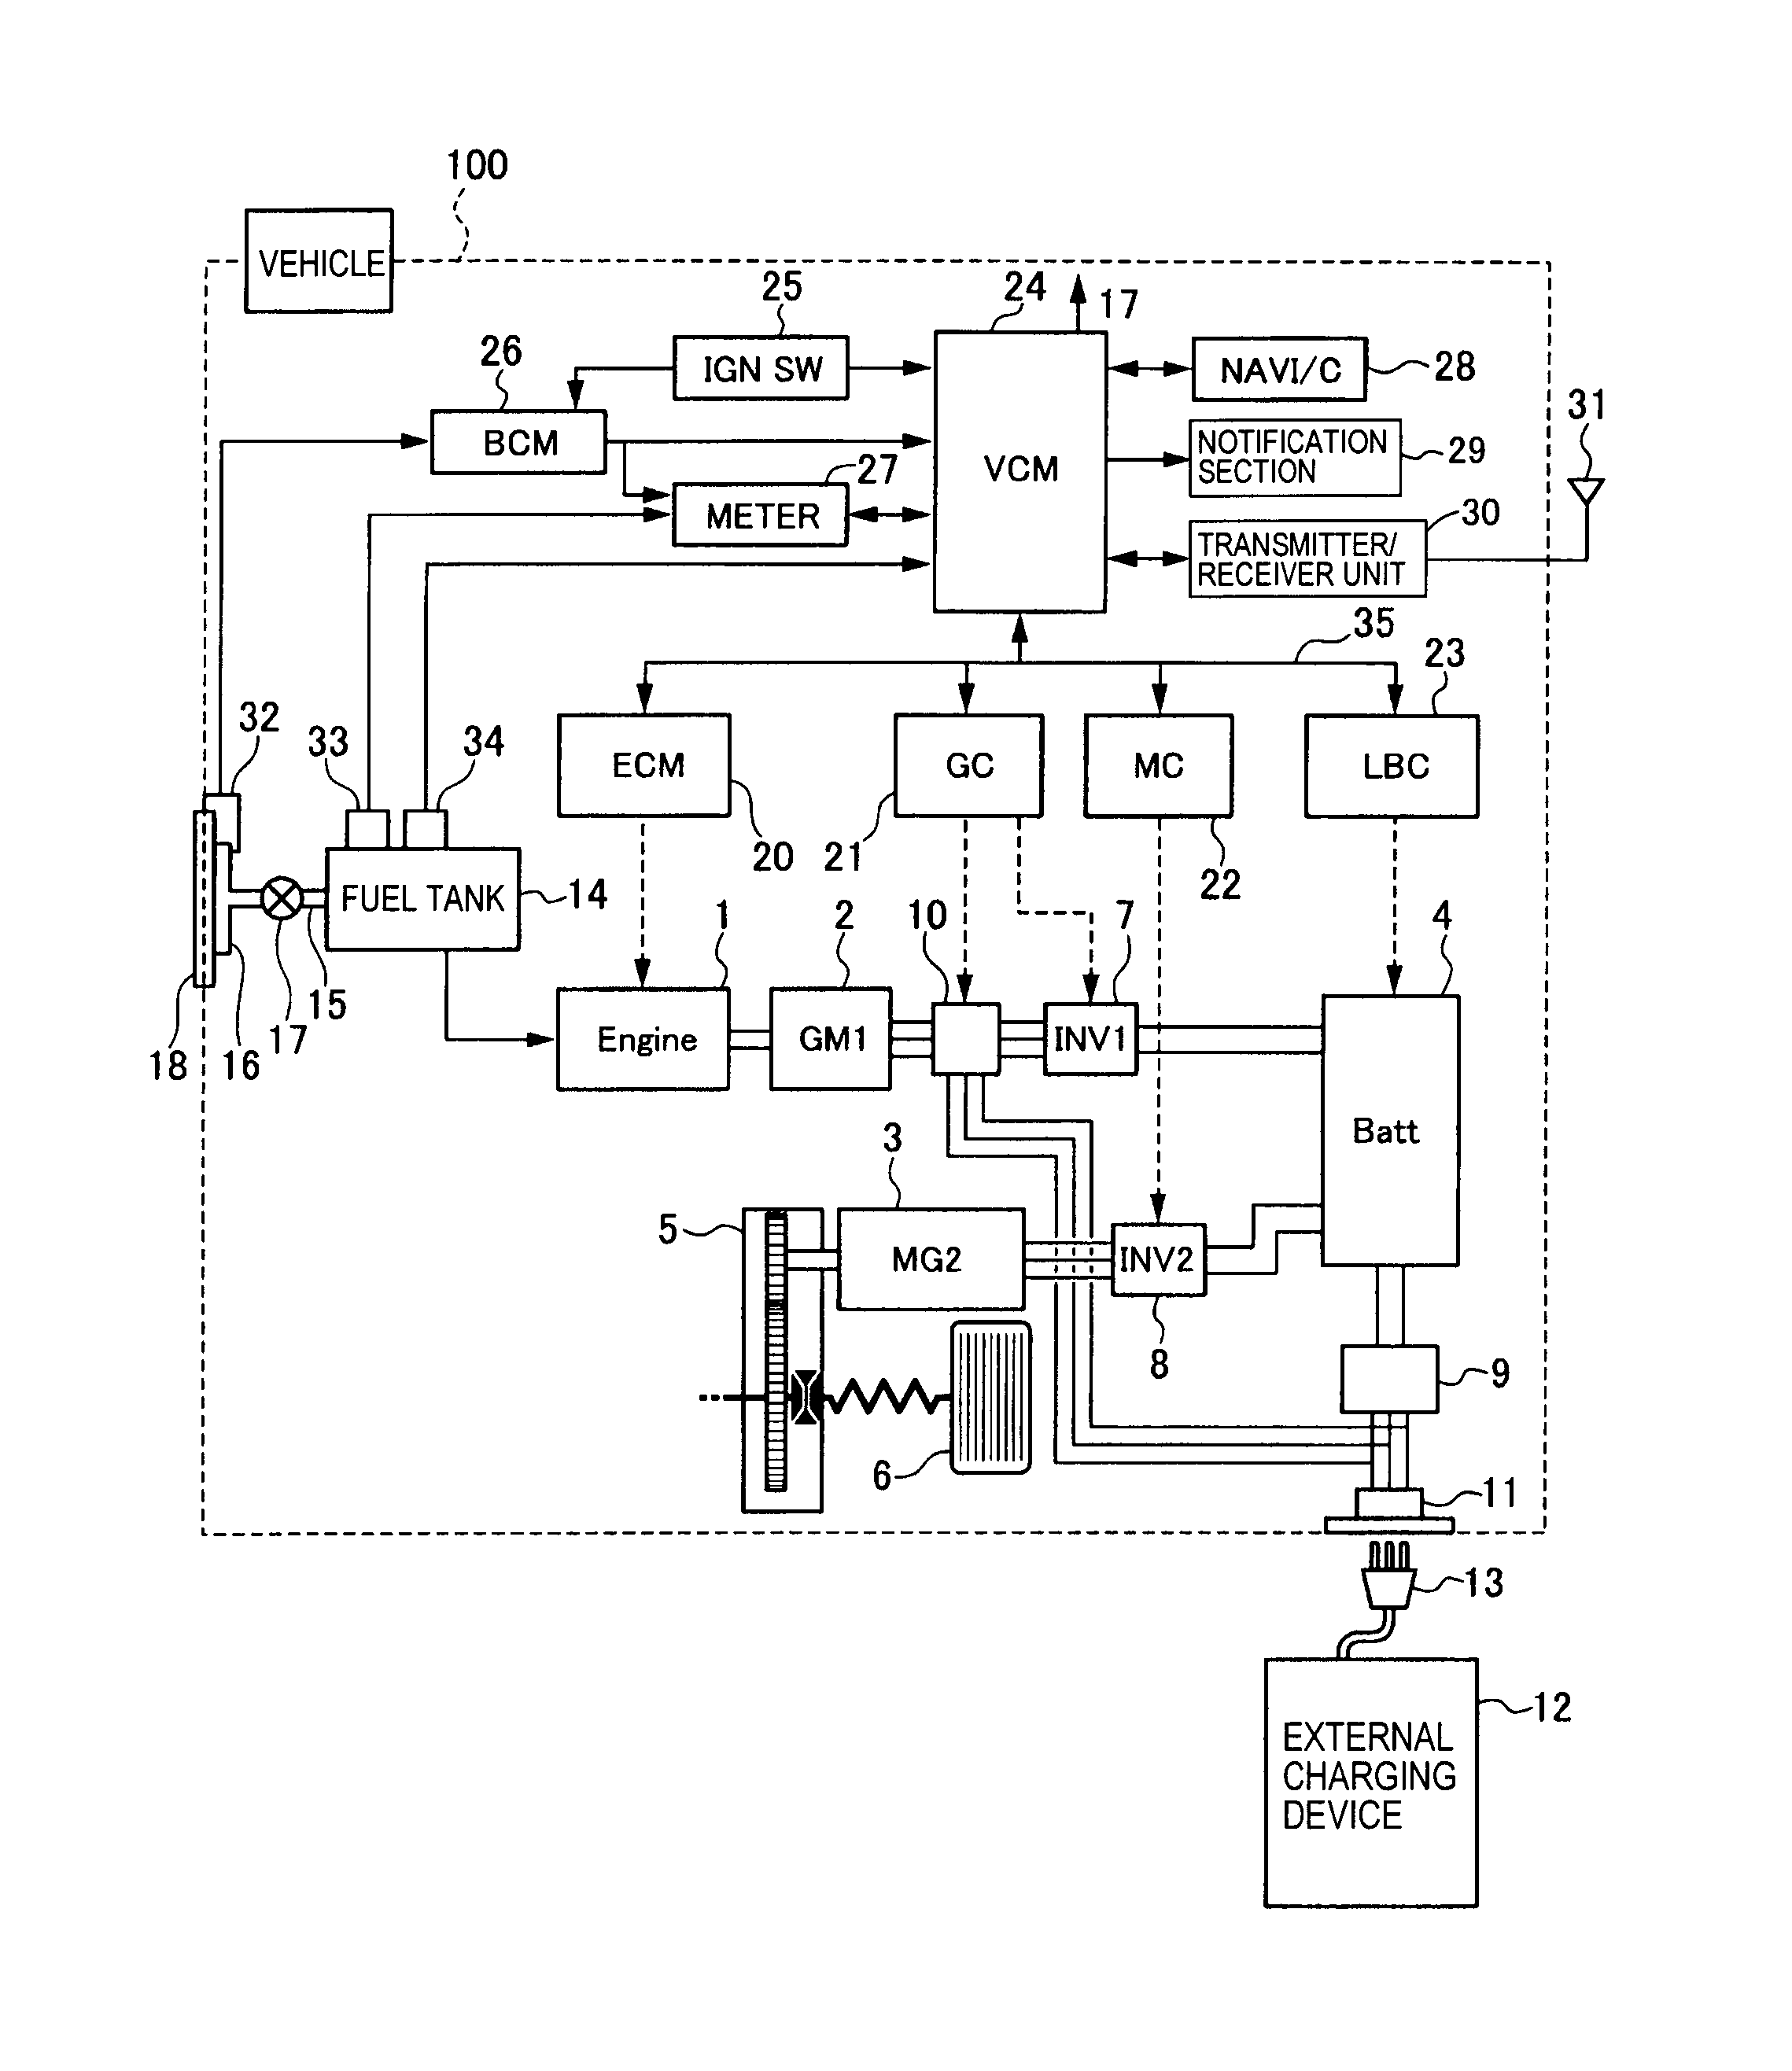 sioux grinder model 5kc65ab48a wiring diagram